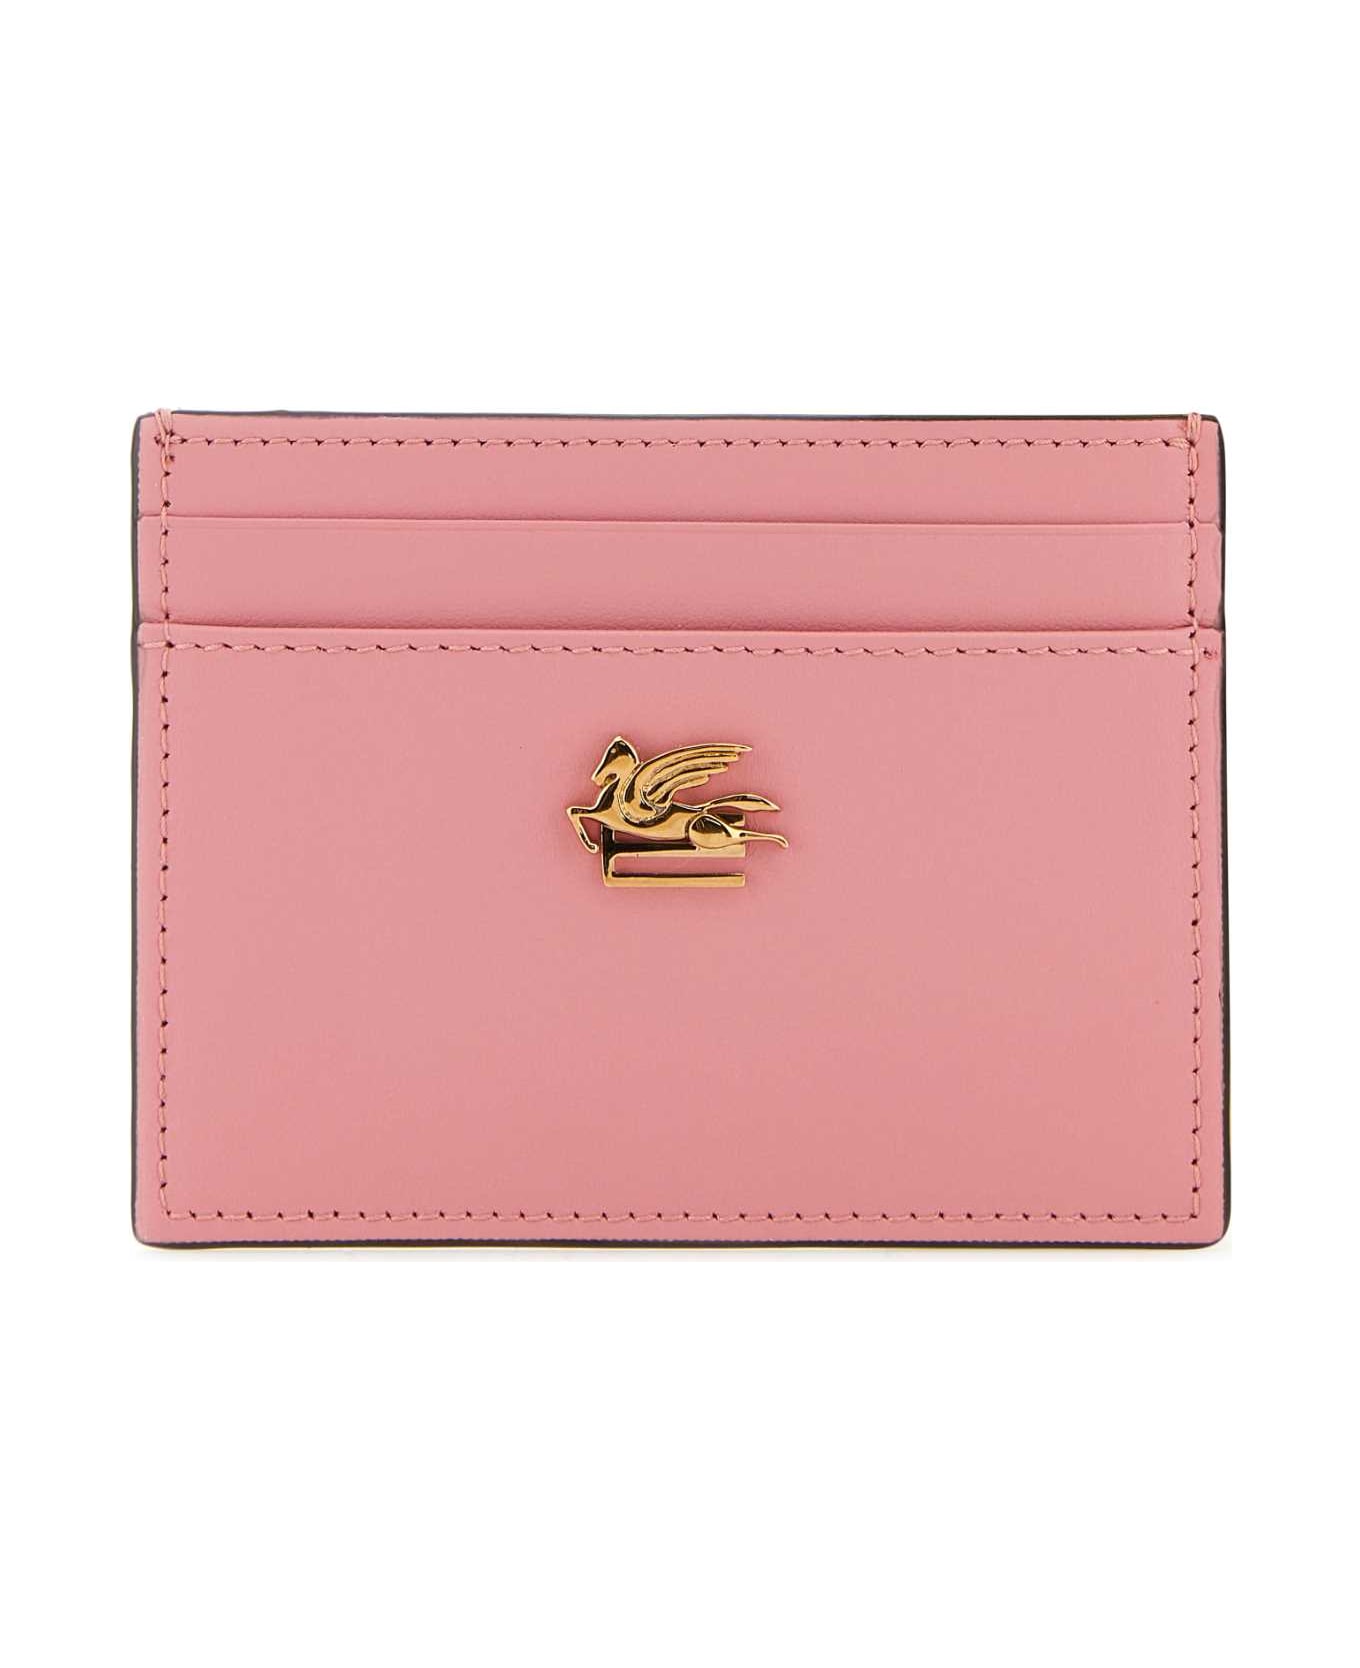 Etro Pink Leather Cardholder - PINK